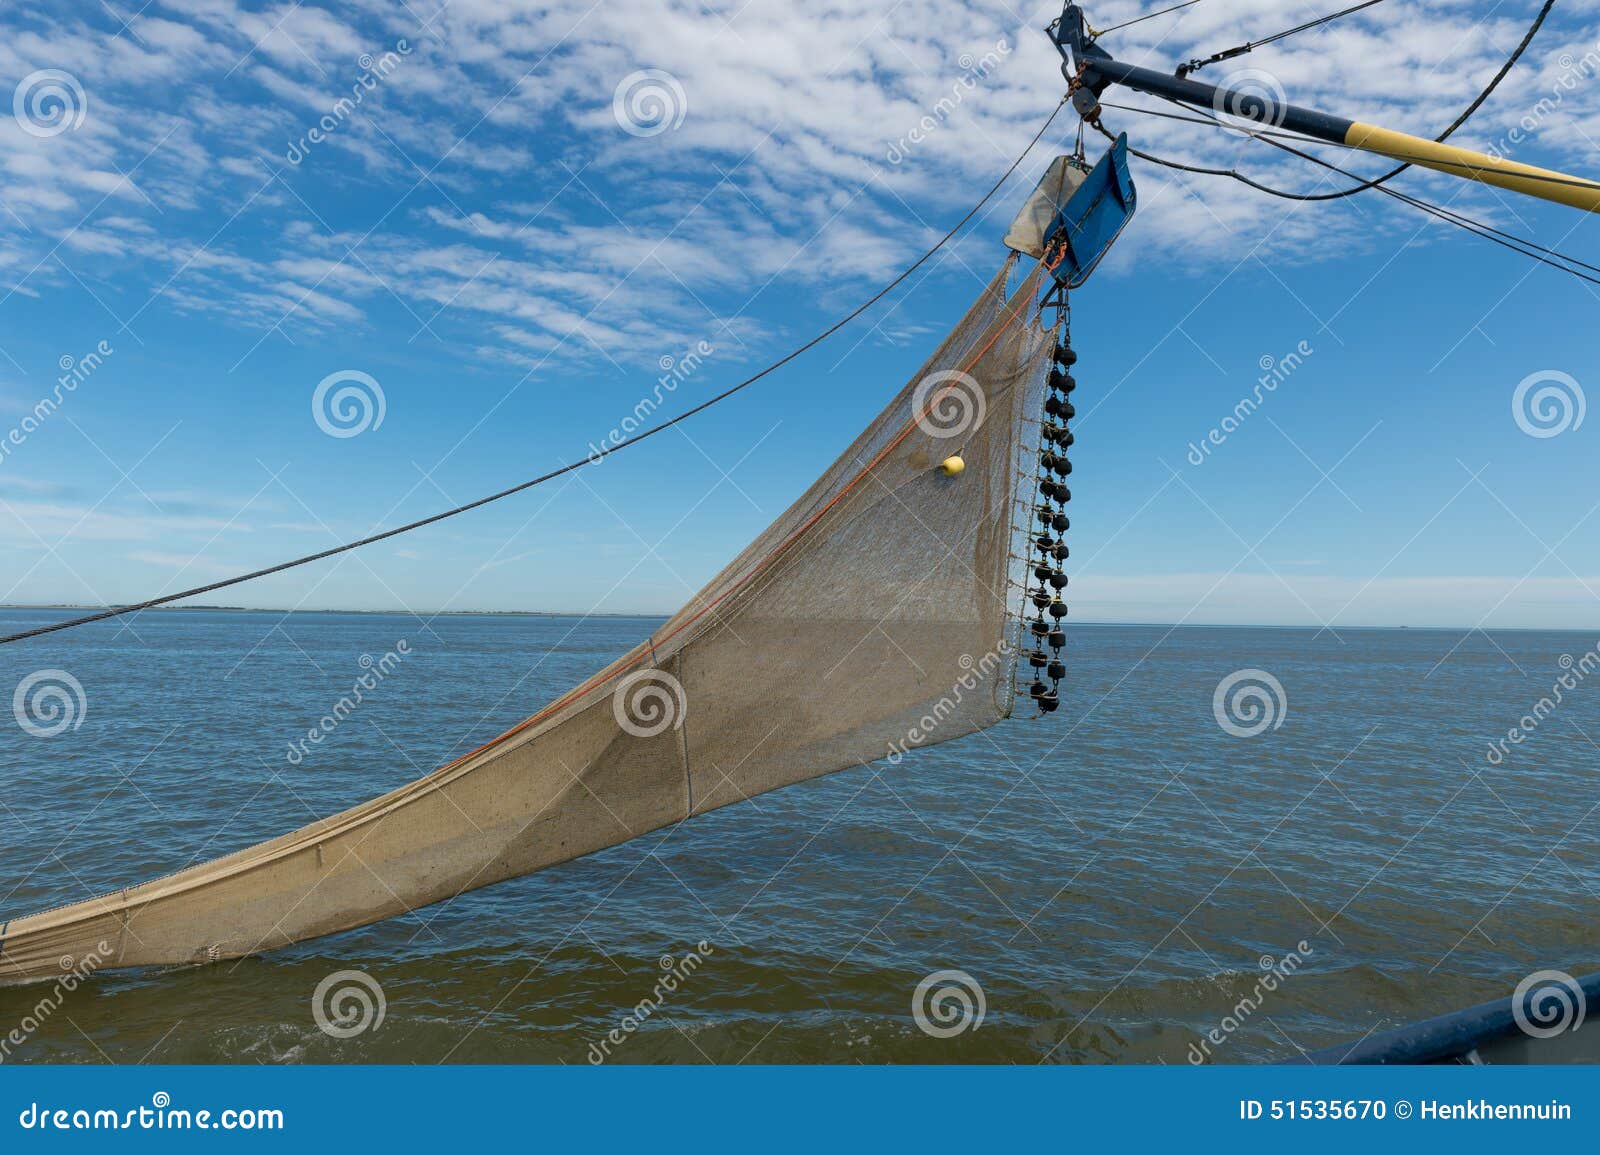 https://thumbs.dreamstime.com/z/shrimp-fishing-net-detail-dutch-fishing-boat-ready-to-drop-water-sea-51535670.jpg